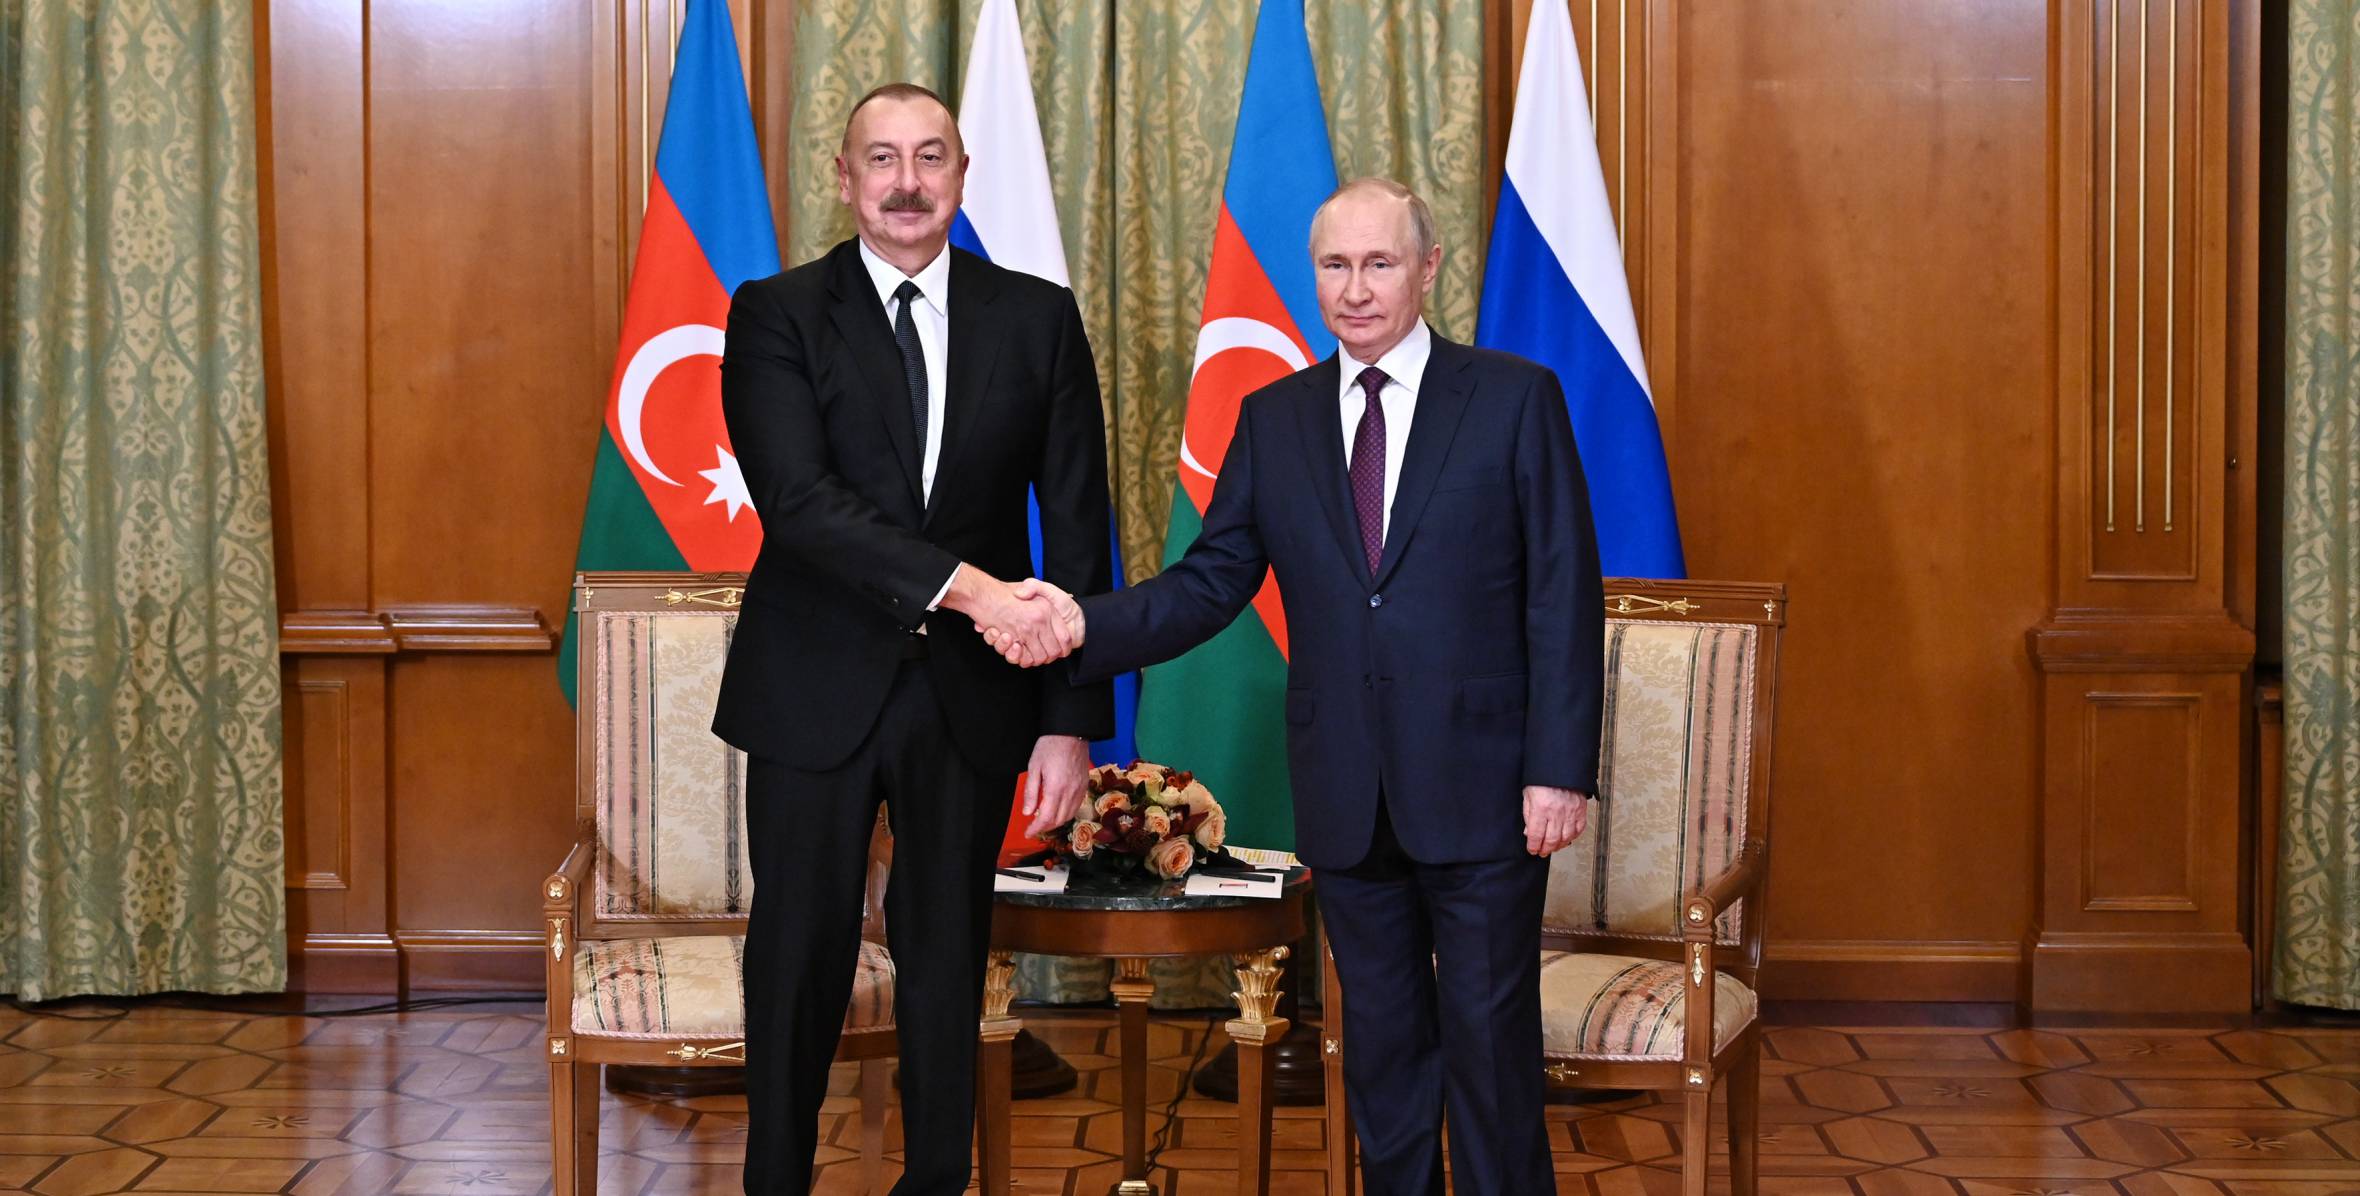 Bilateral meeting was held between President of Azerbaijan Ilham Aliyev and President of Russia Vladimir Putin in Sochi